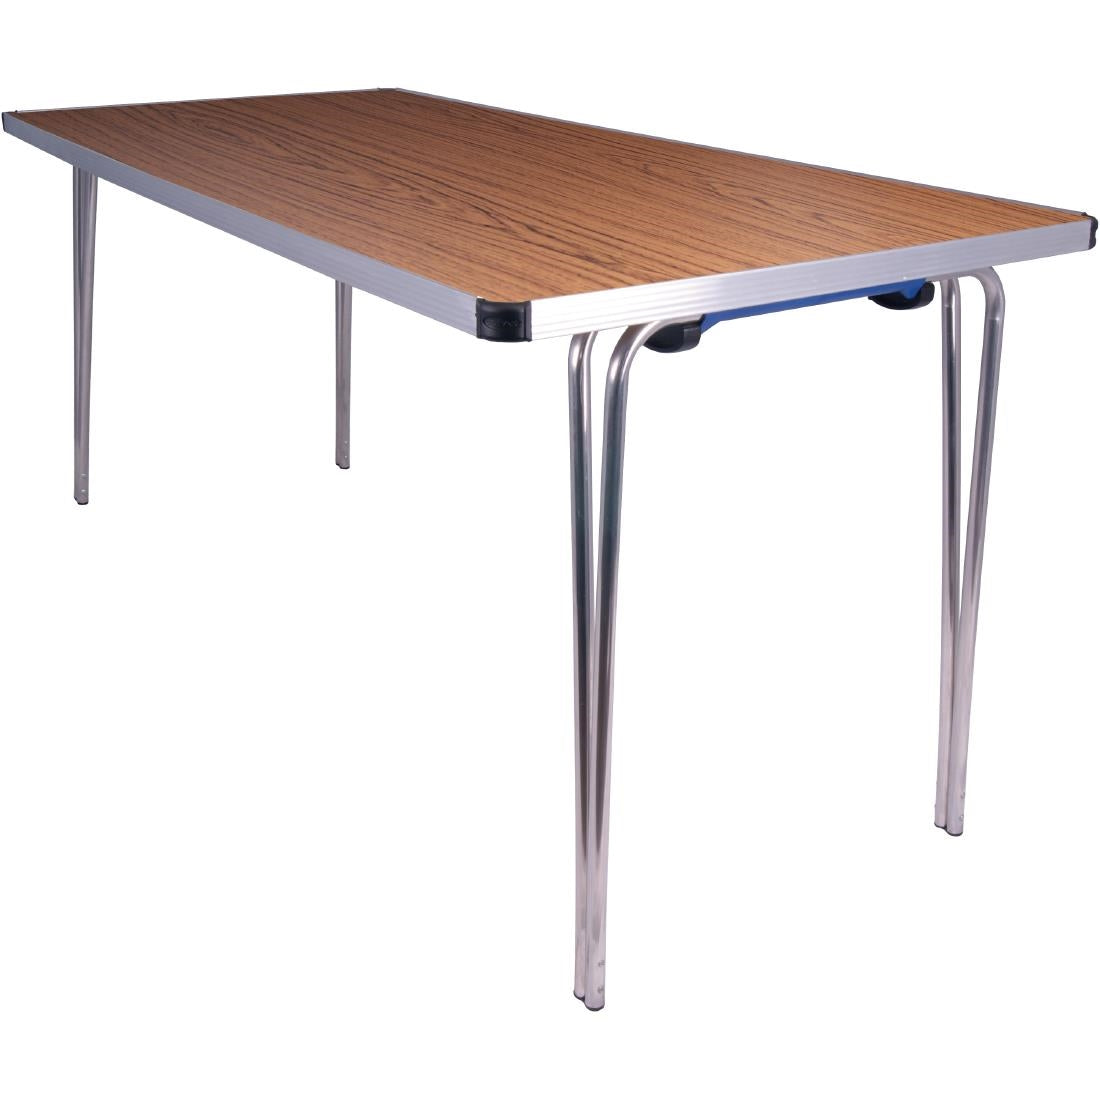 DM694 Gopak Contour Folding Table Teak 5ft JD Catering Equipment Solutions Ltd